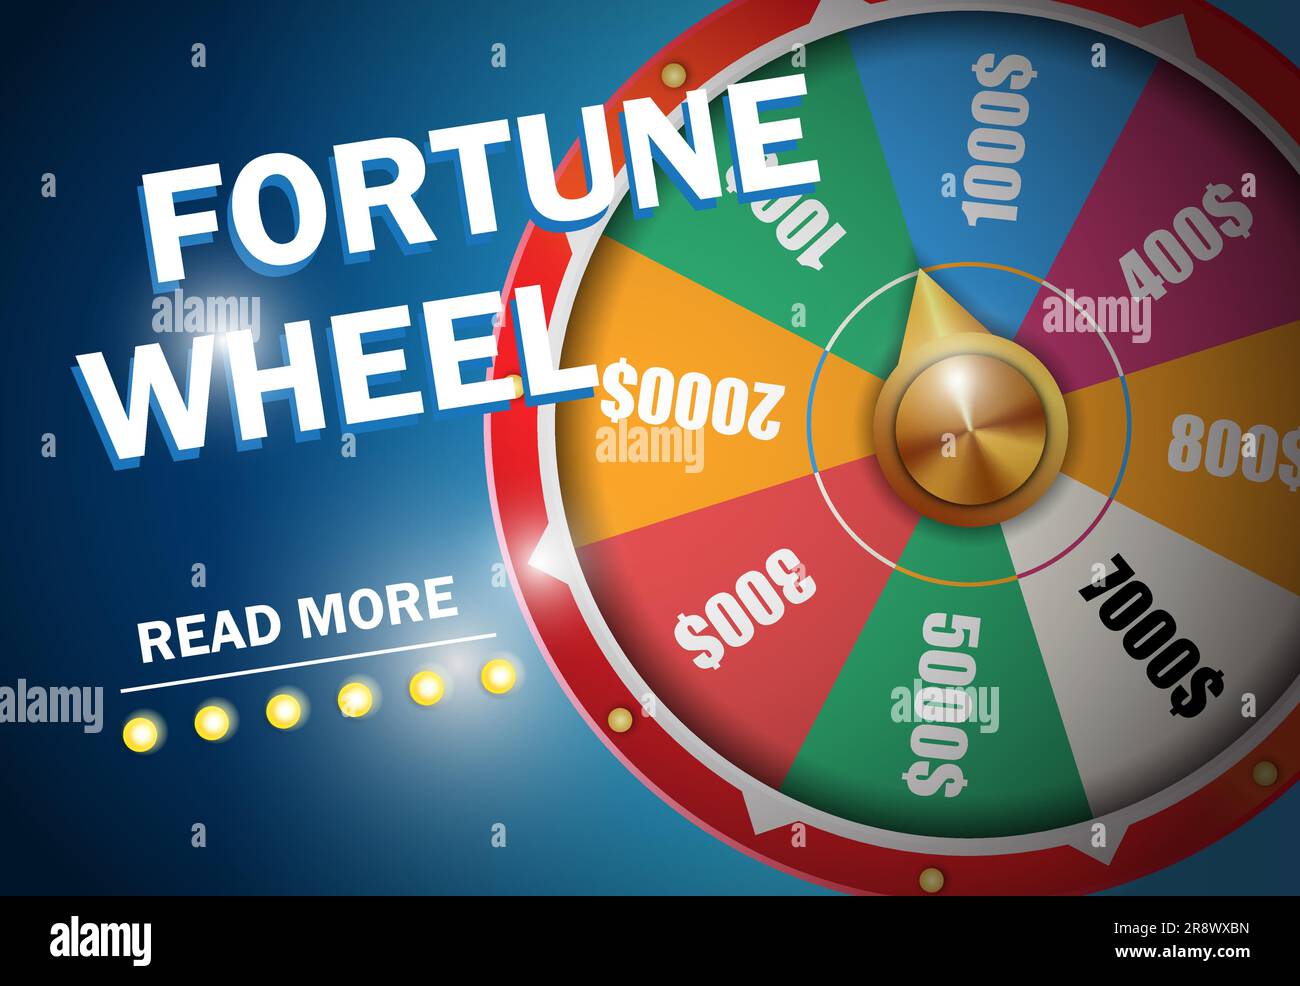 Fortune wheel inscription on blue background Stock Vector